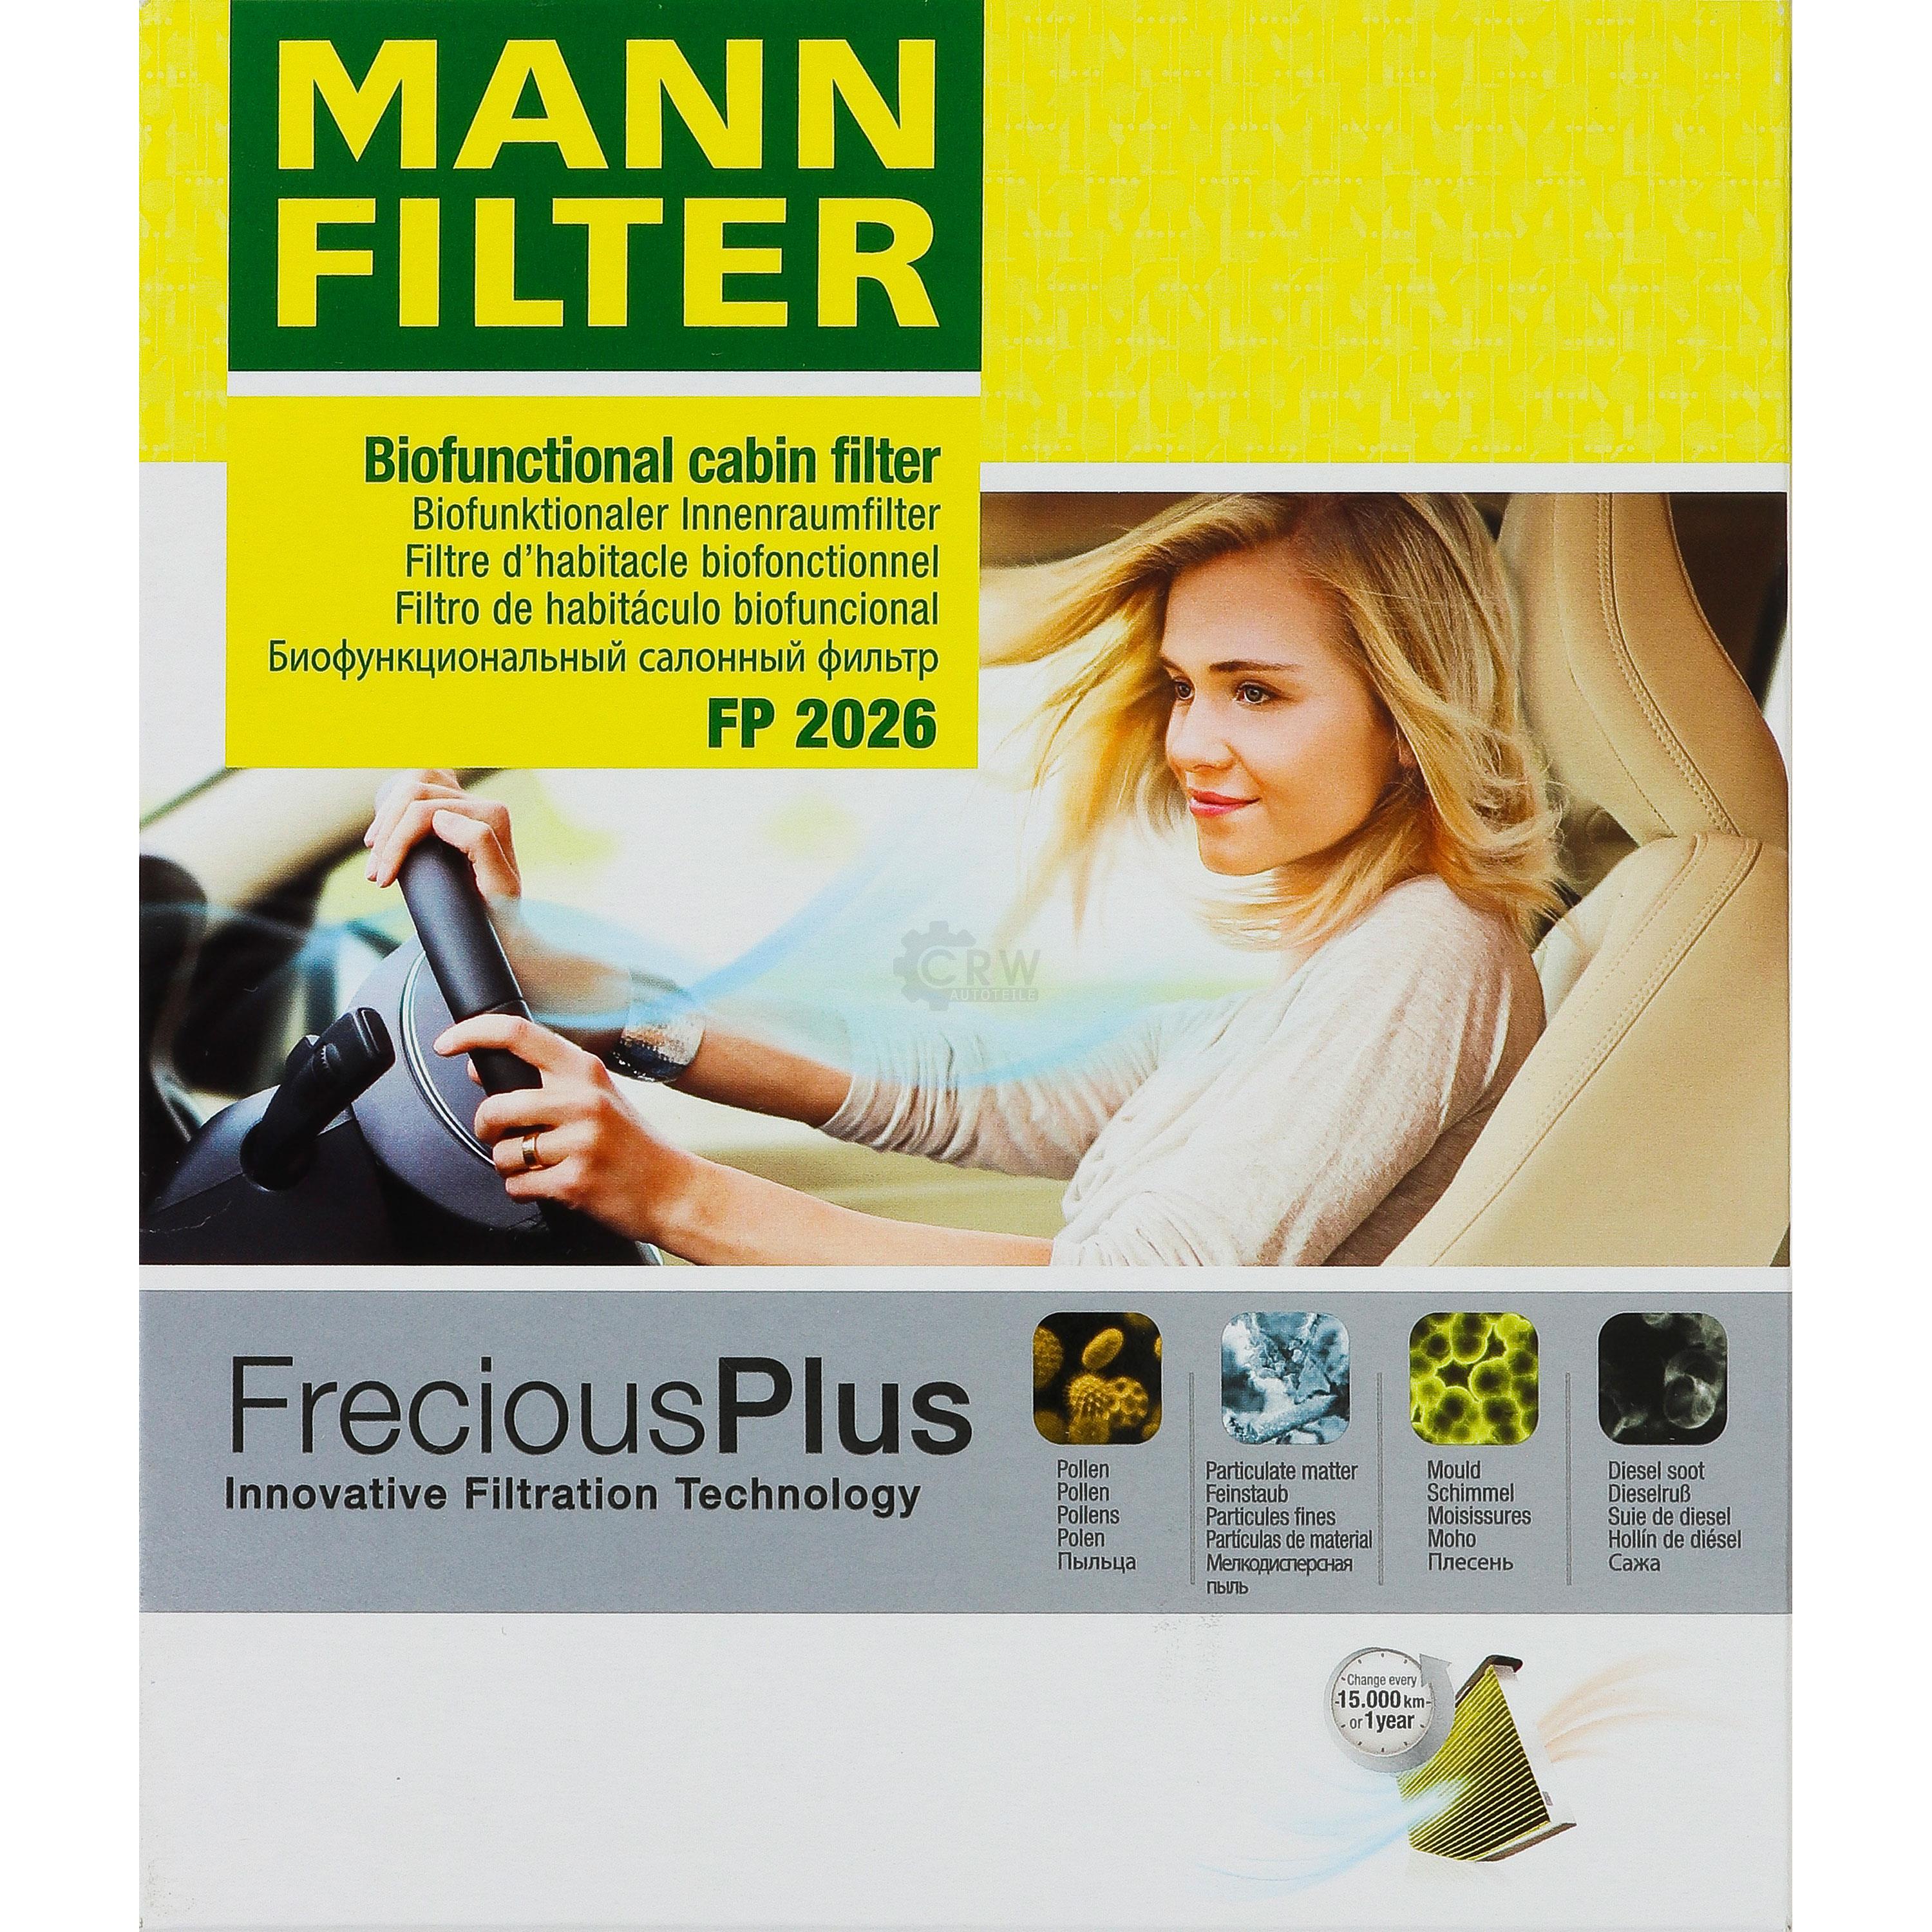 MANN-Filter Innenraumfilter Biofunctional für Allergiker FP 2026